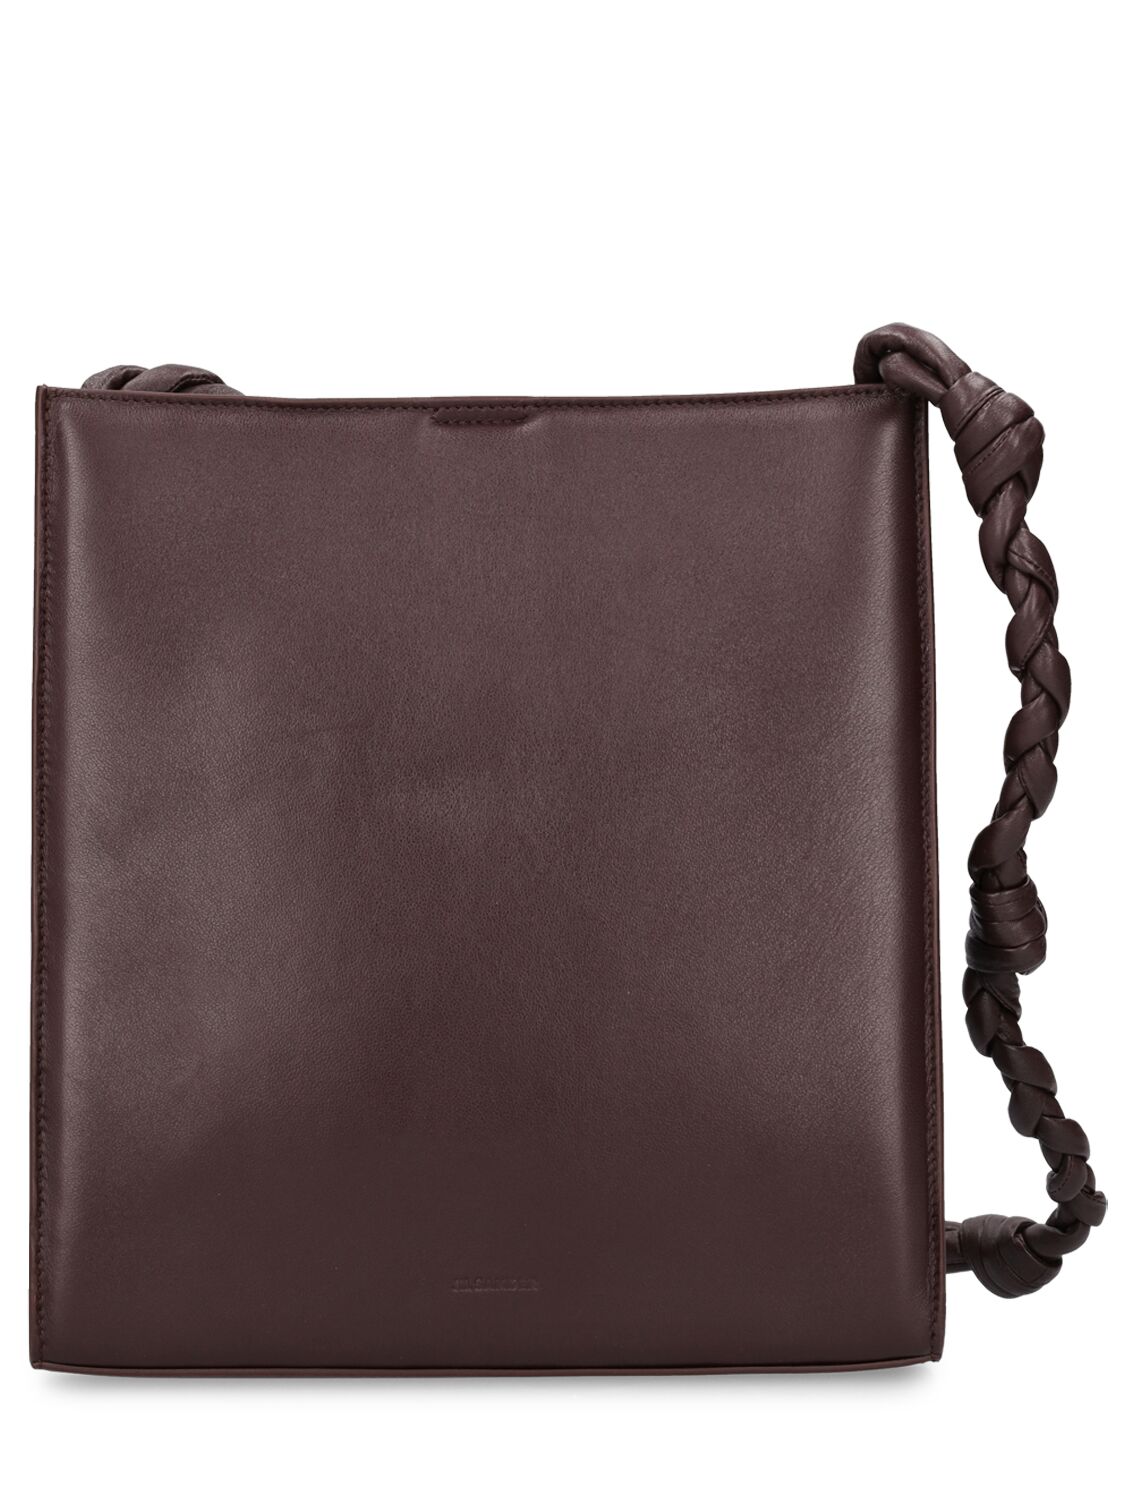 Jil Sander Women's Medium Tangle Leather Shoulder Bag In Dark Earth